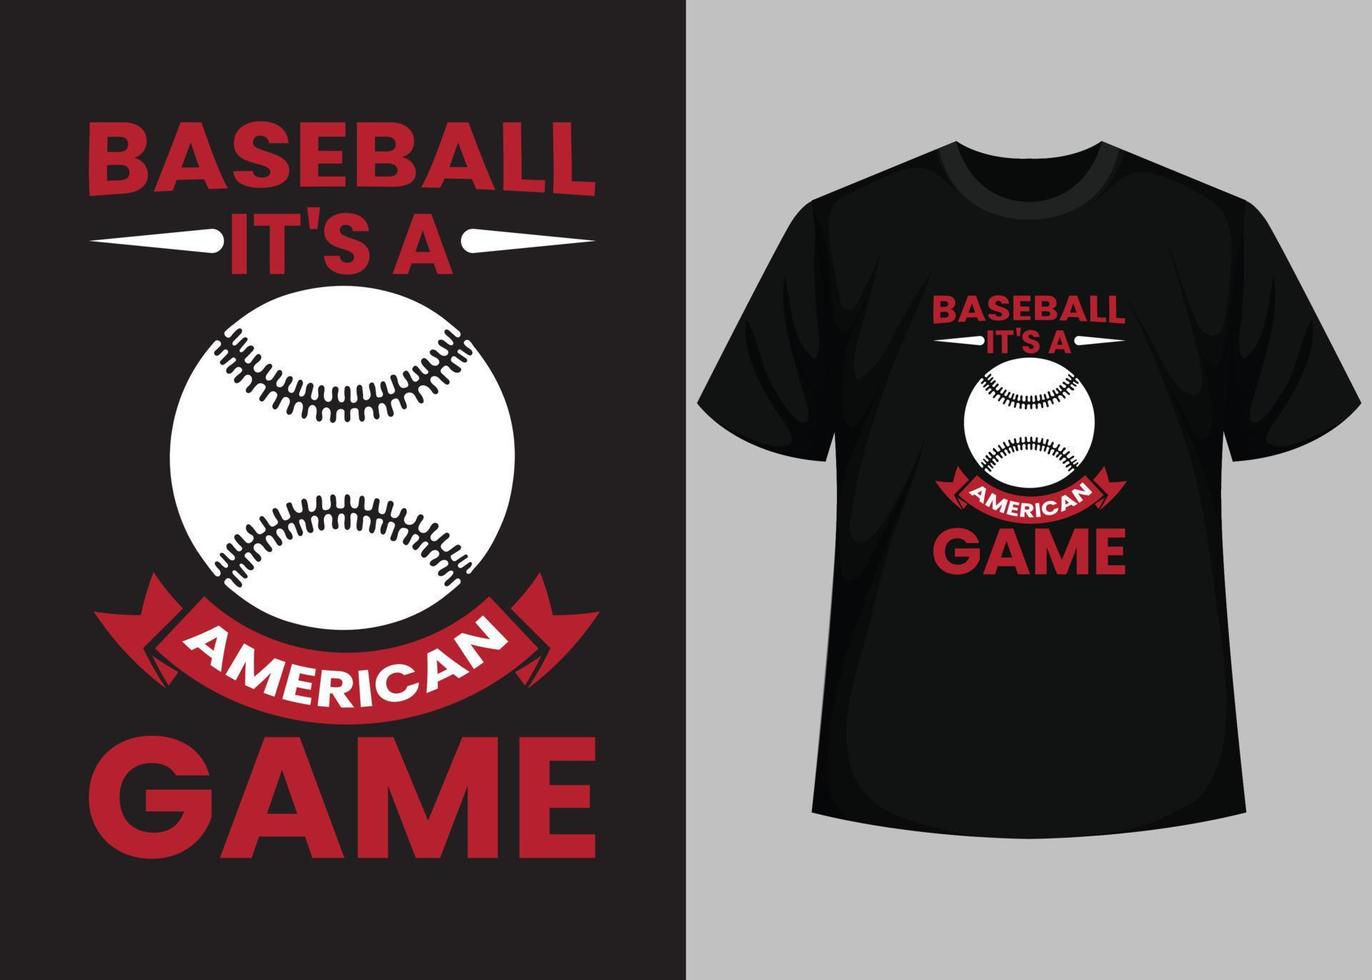 Baseball its a American game for baseball t-shirt design. Baseball t-shirt design printable vector template. Typography, vintage, retro baseball t-shirt design.